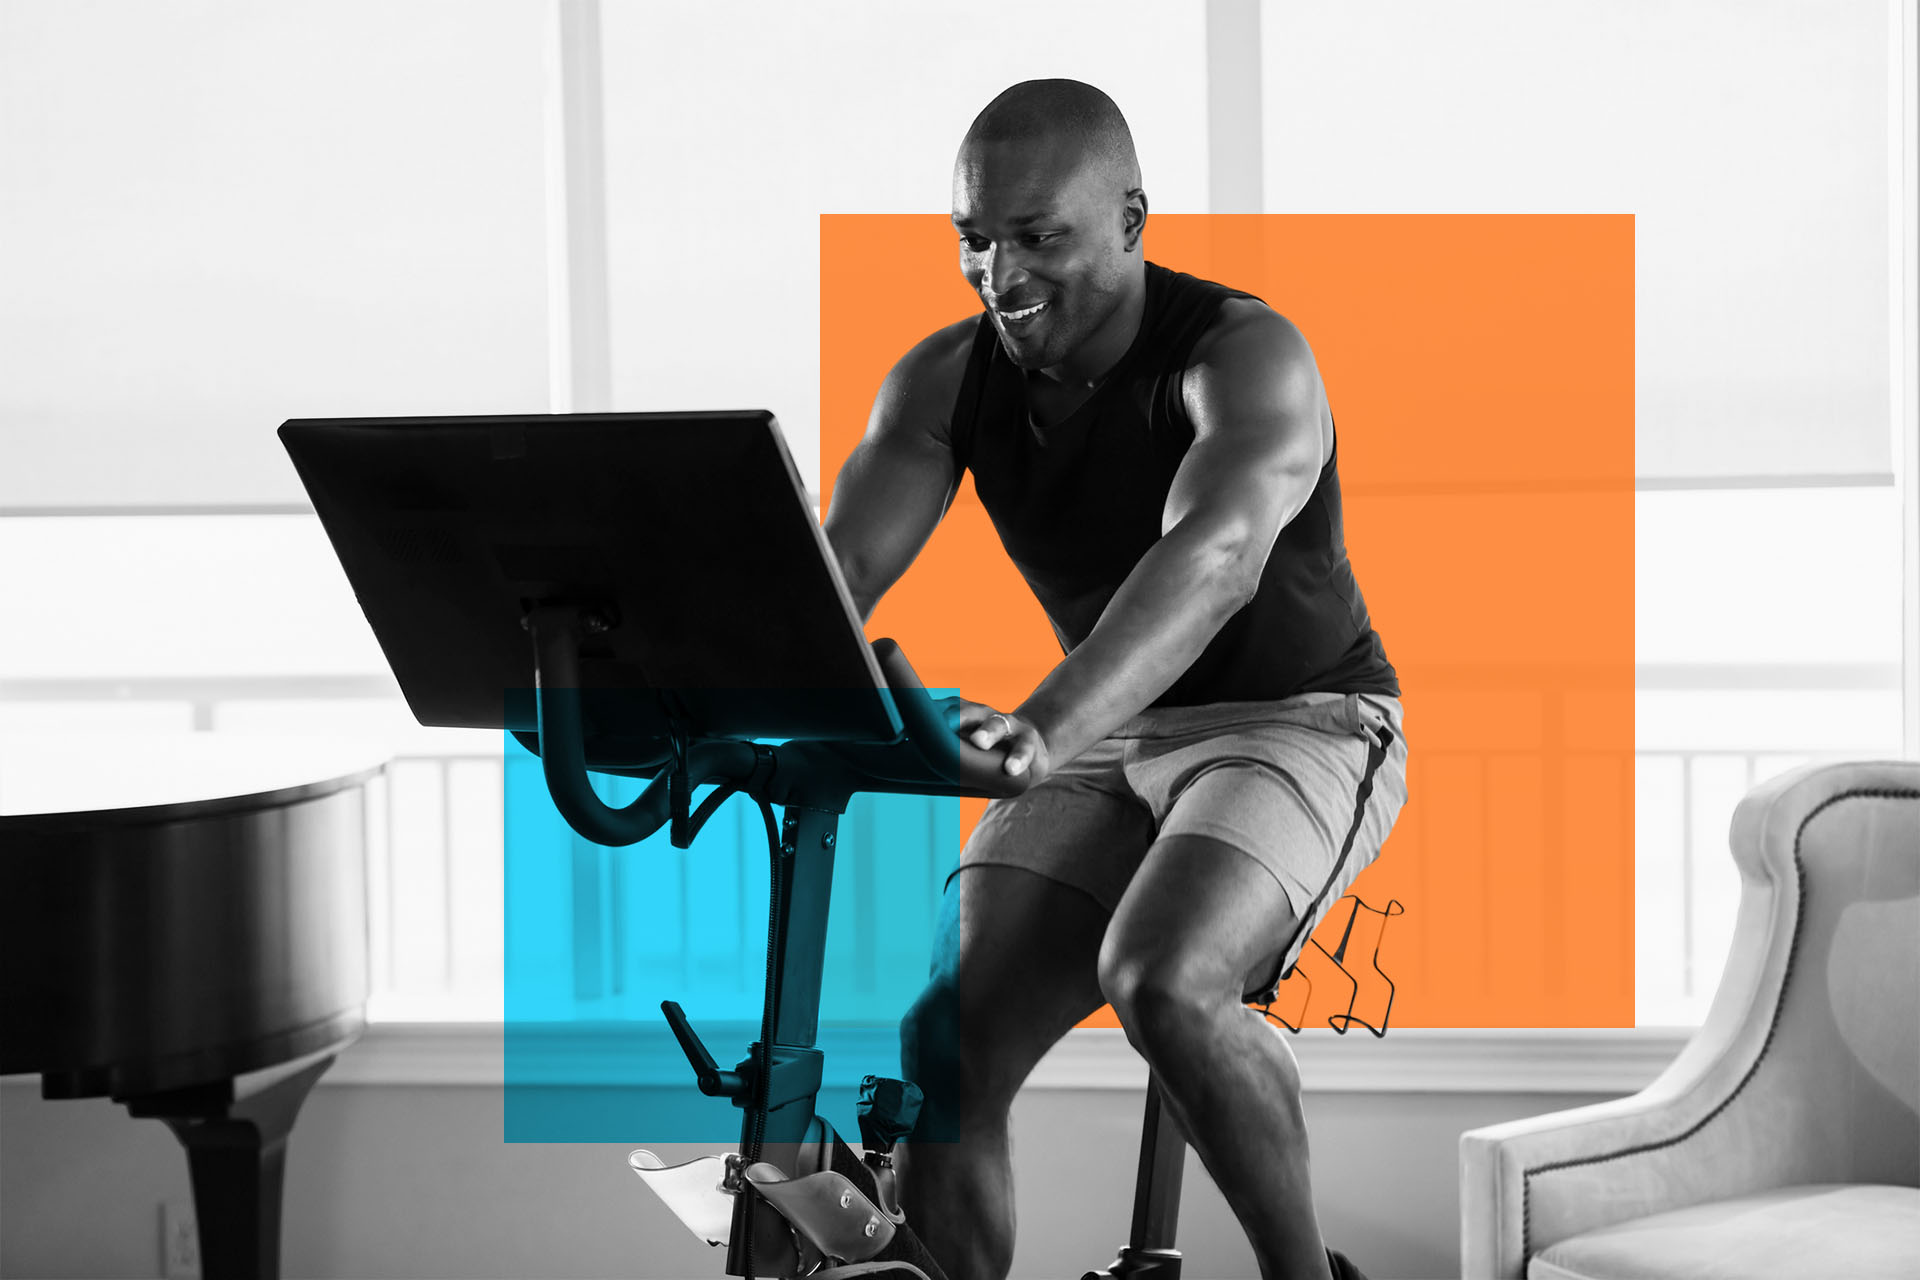 Modded featured image of a workout using digital biking tech